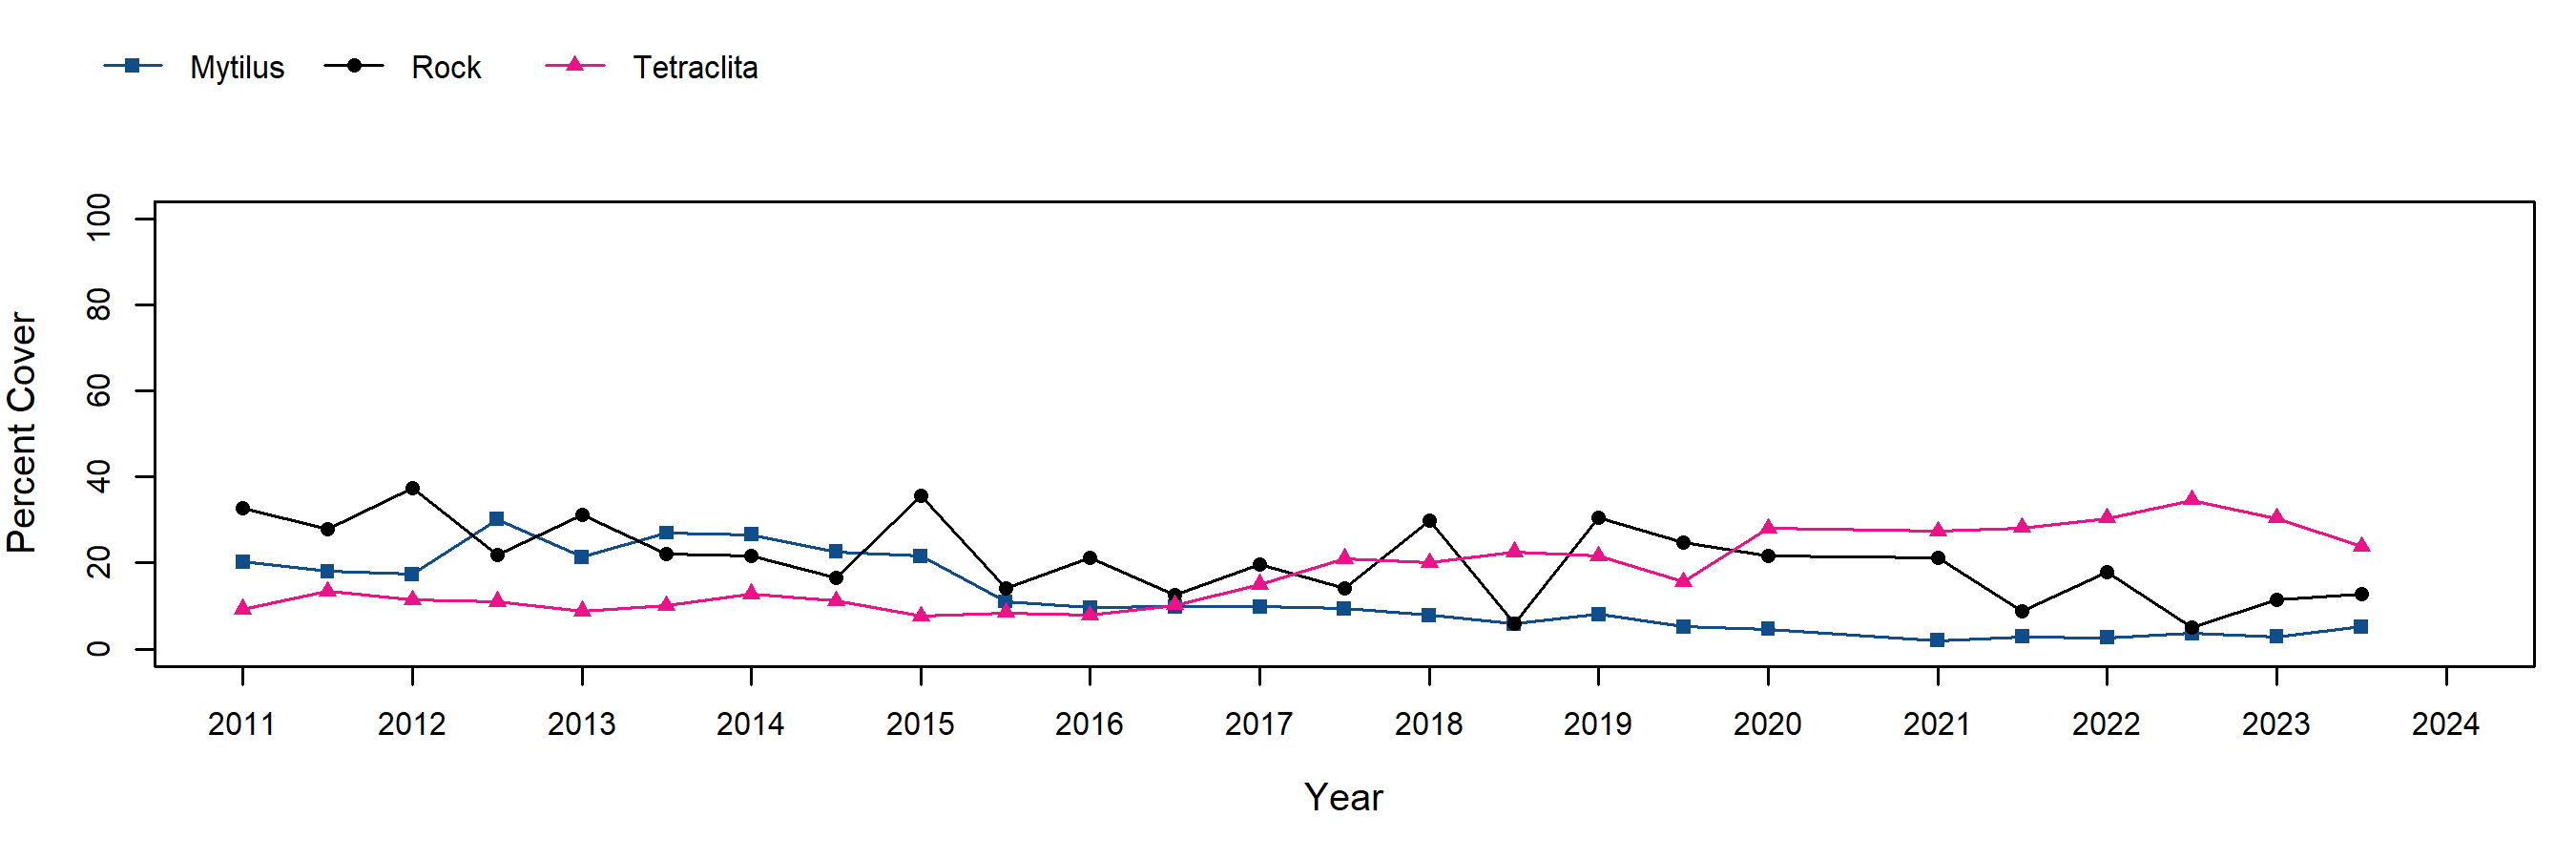 West Cove Mytilus trend plot